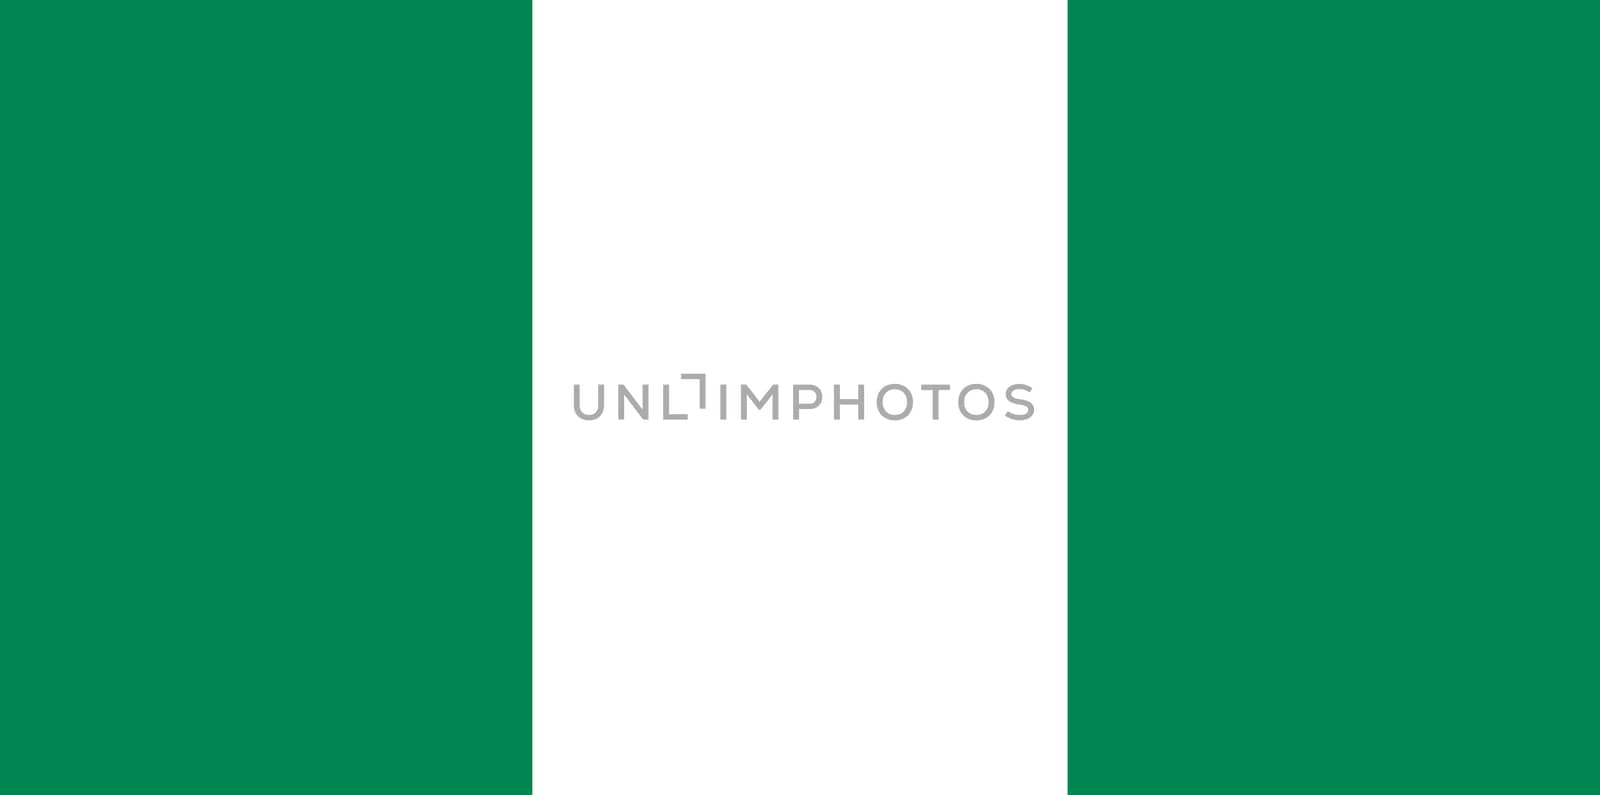 Nigeria National Flag by Bigalbaloo